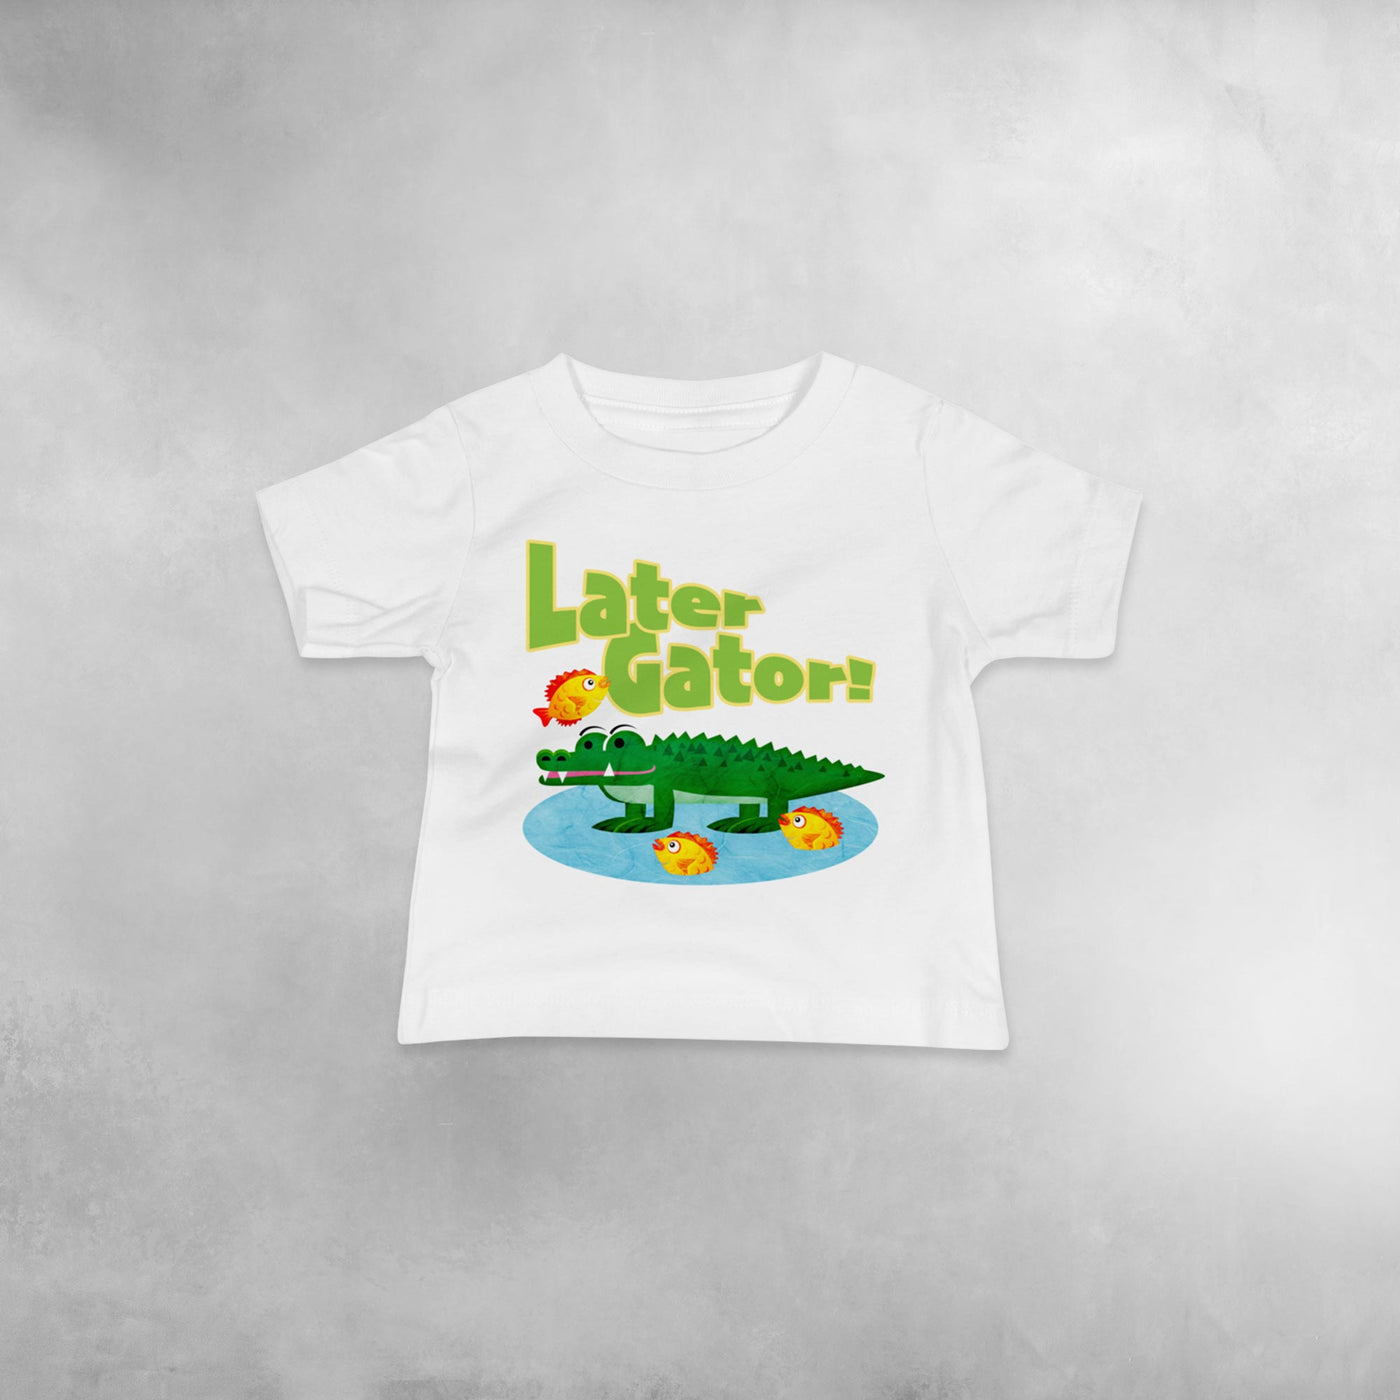 Later Gator - Baby T-Shirt